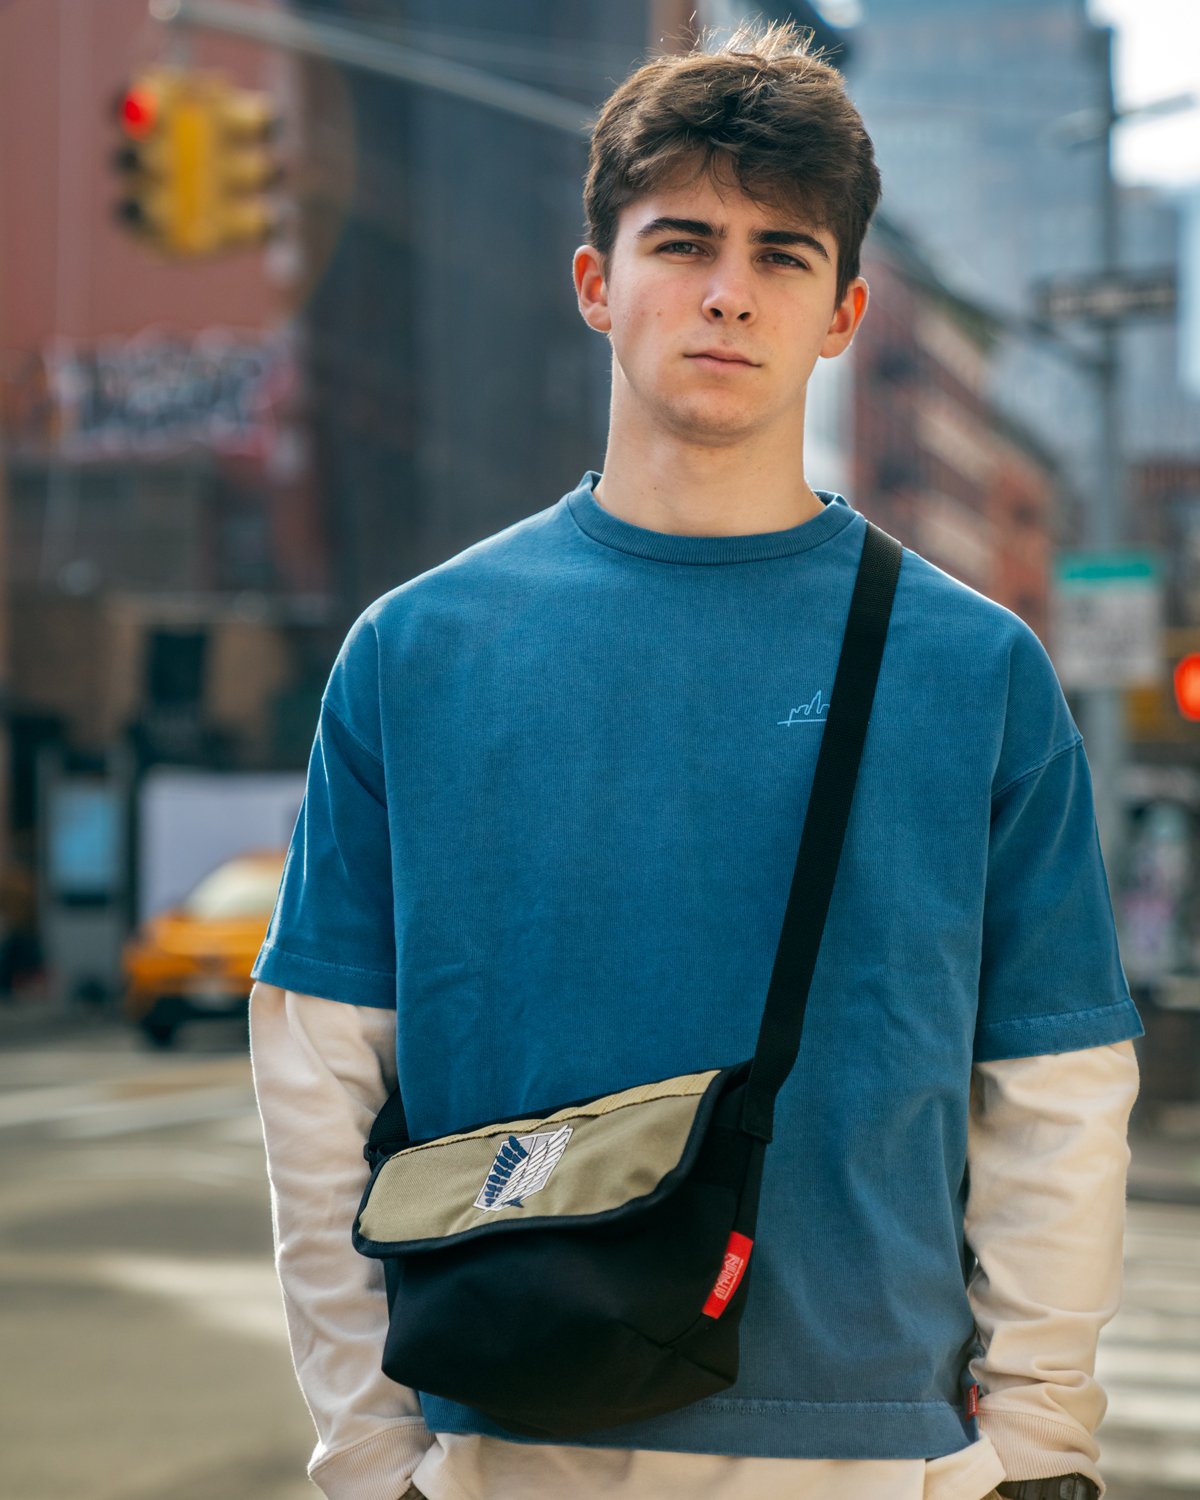  man in blue shirt with Manhattan Portage x Attack on Titan bag 